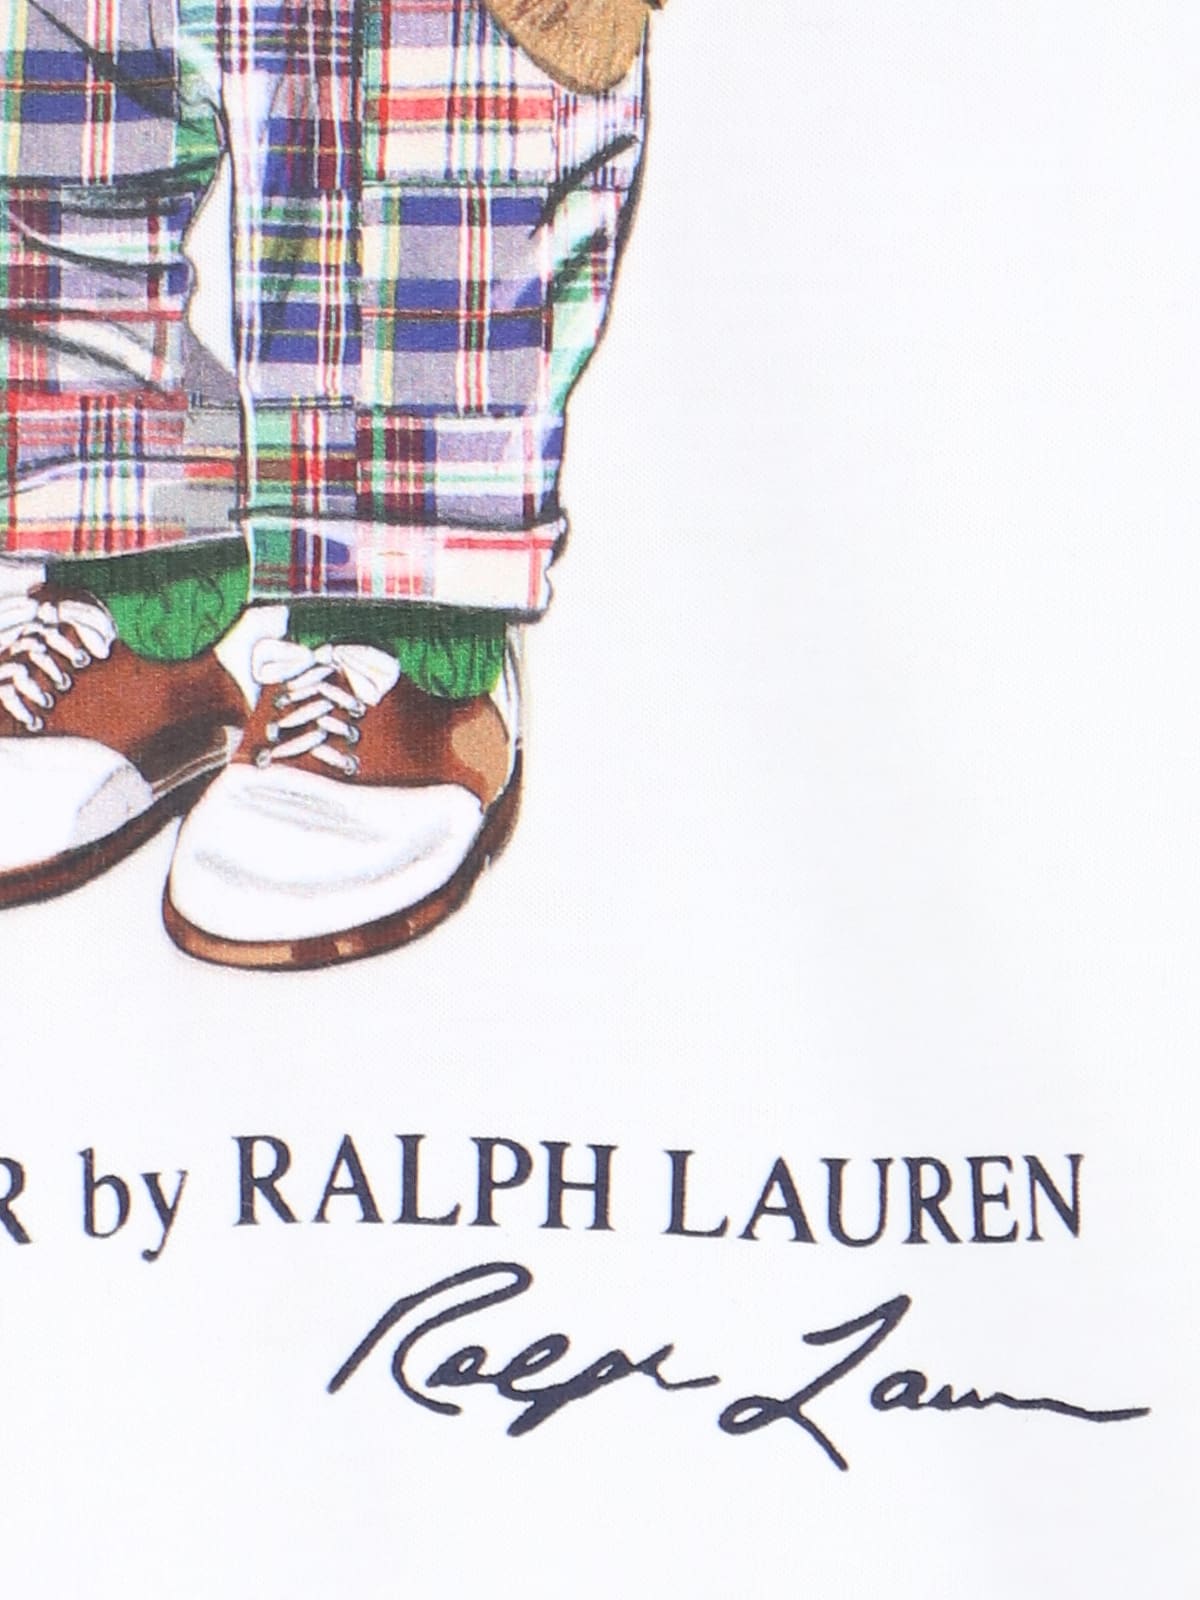 Shop Polo Ralph Lauren Polo Bear T-shirt In White